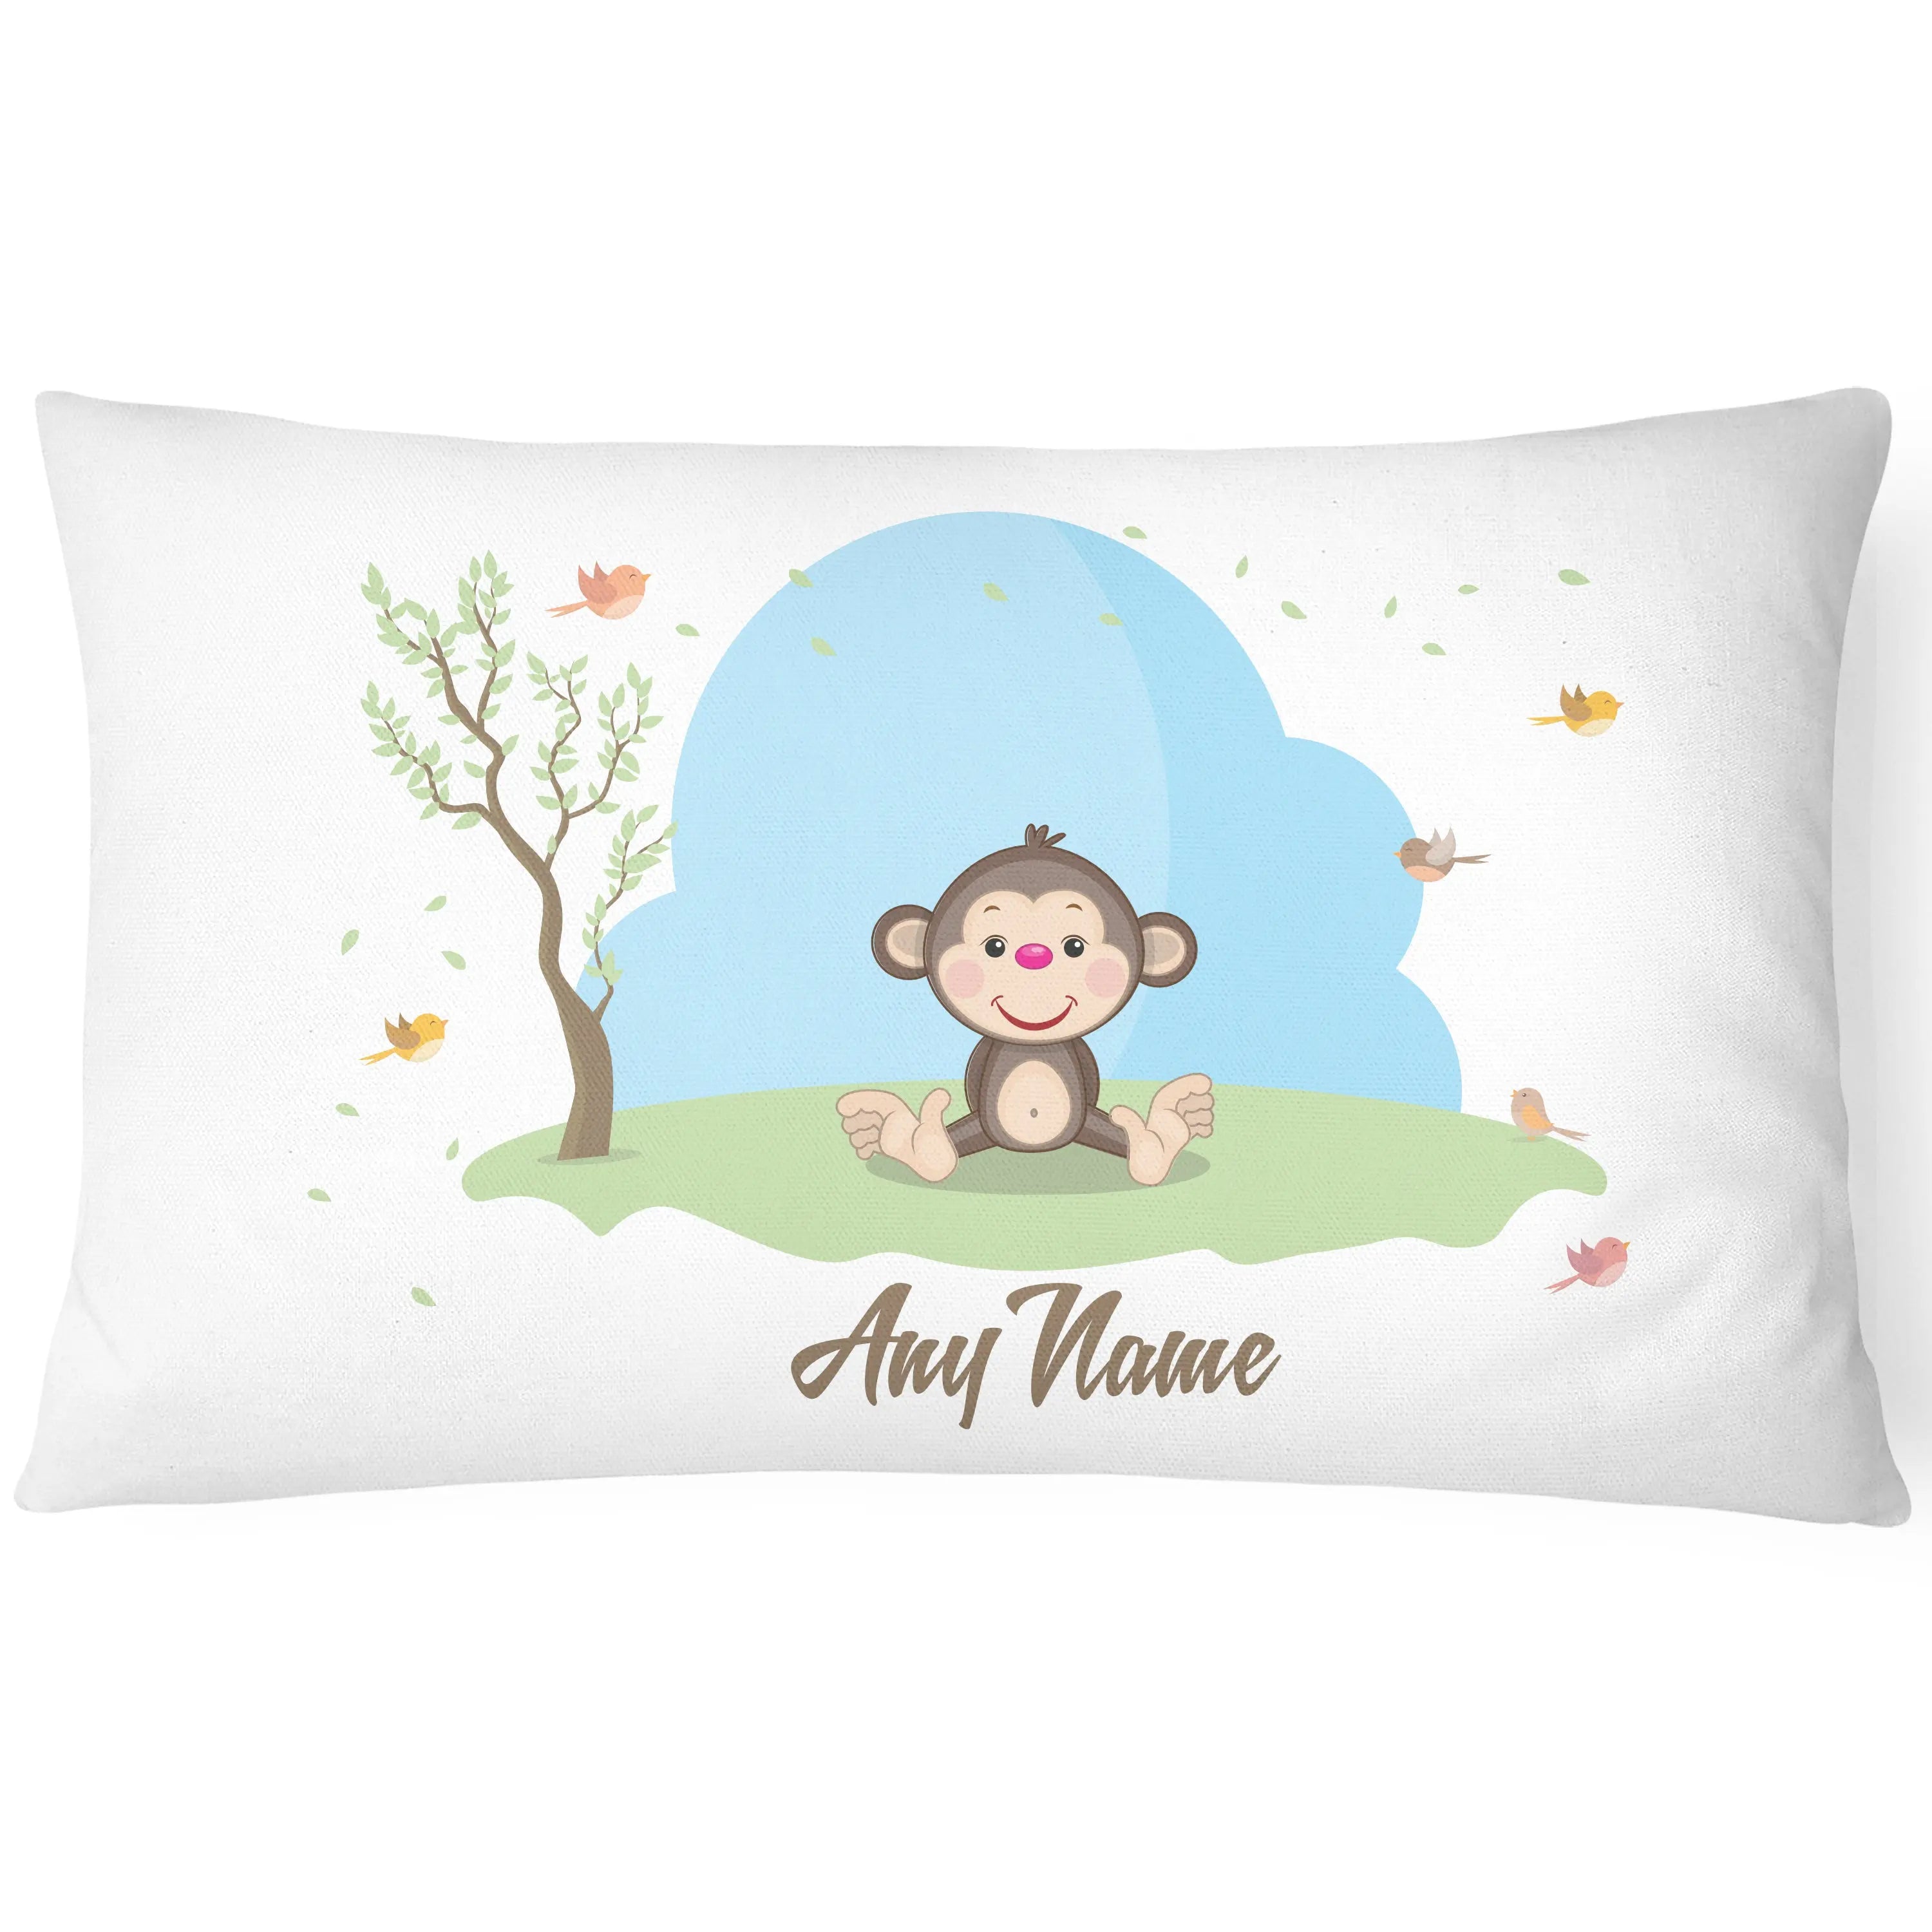 Personalised Children's Pillowcase Cute Animal - Sweet - CushionPop